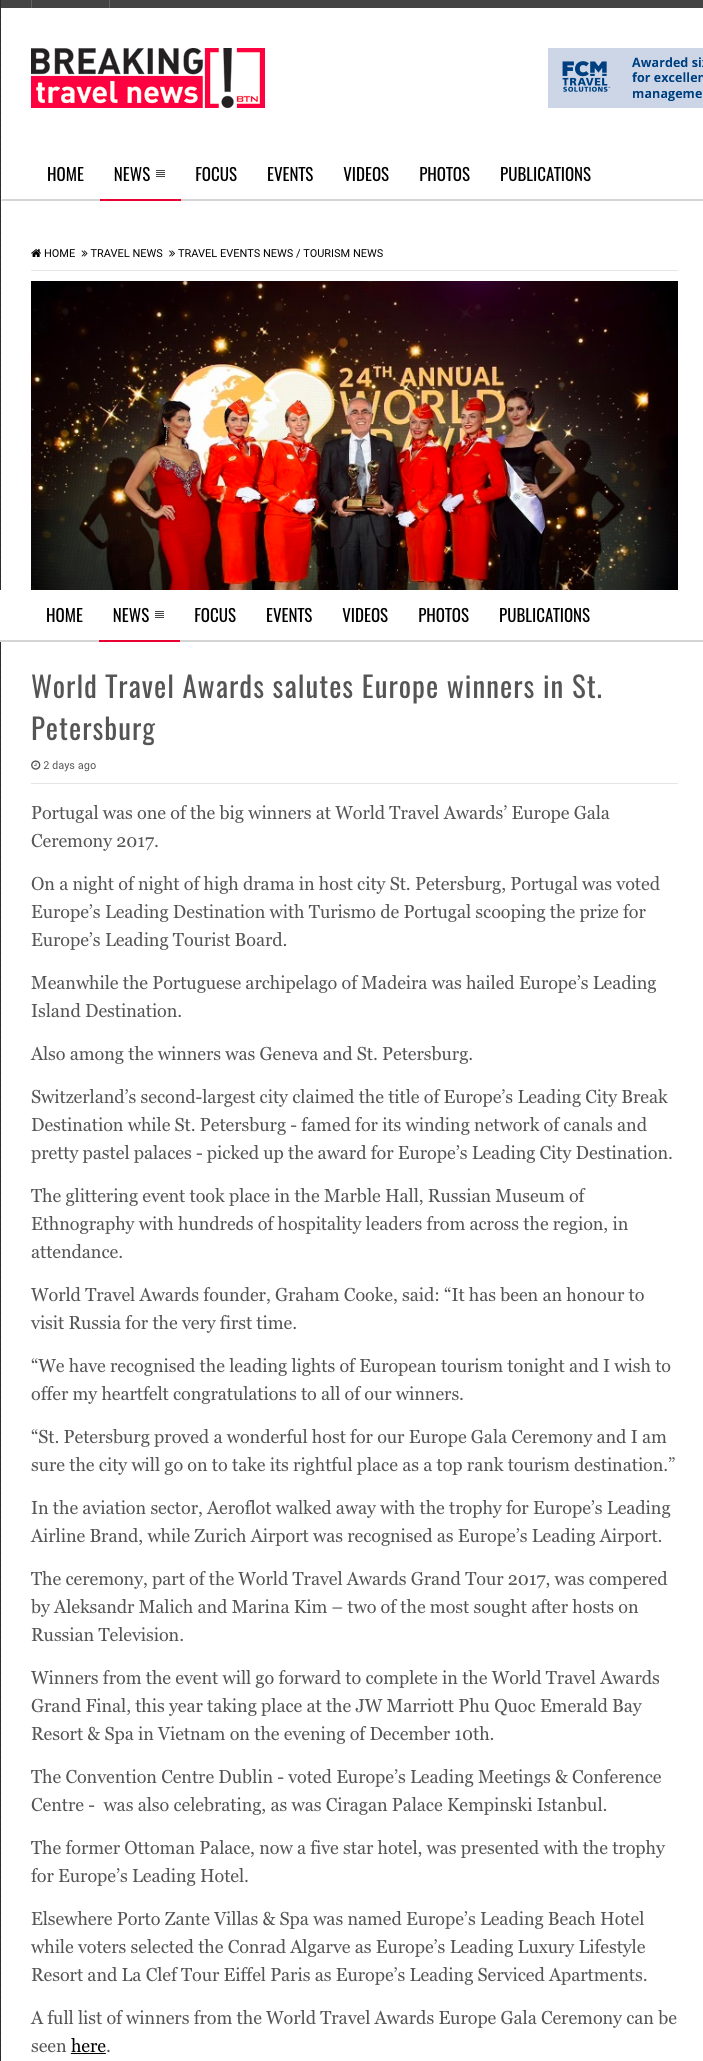 World Travel Awards salutes Europe winners in St. Petersburg